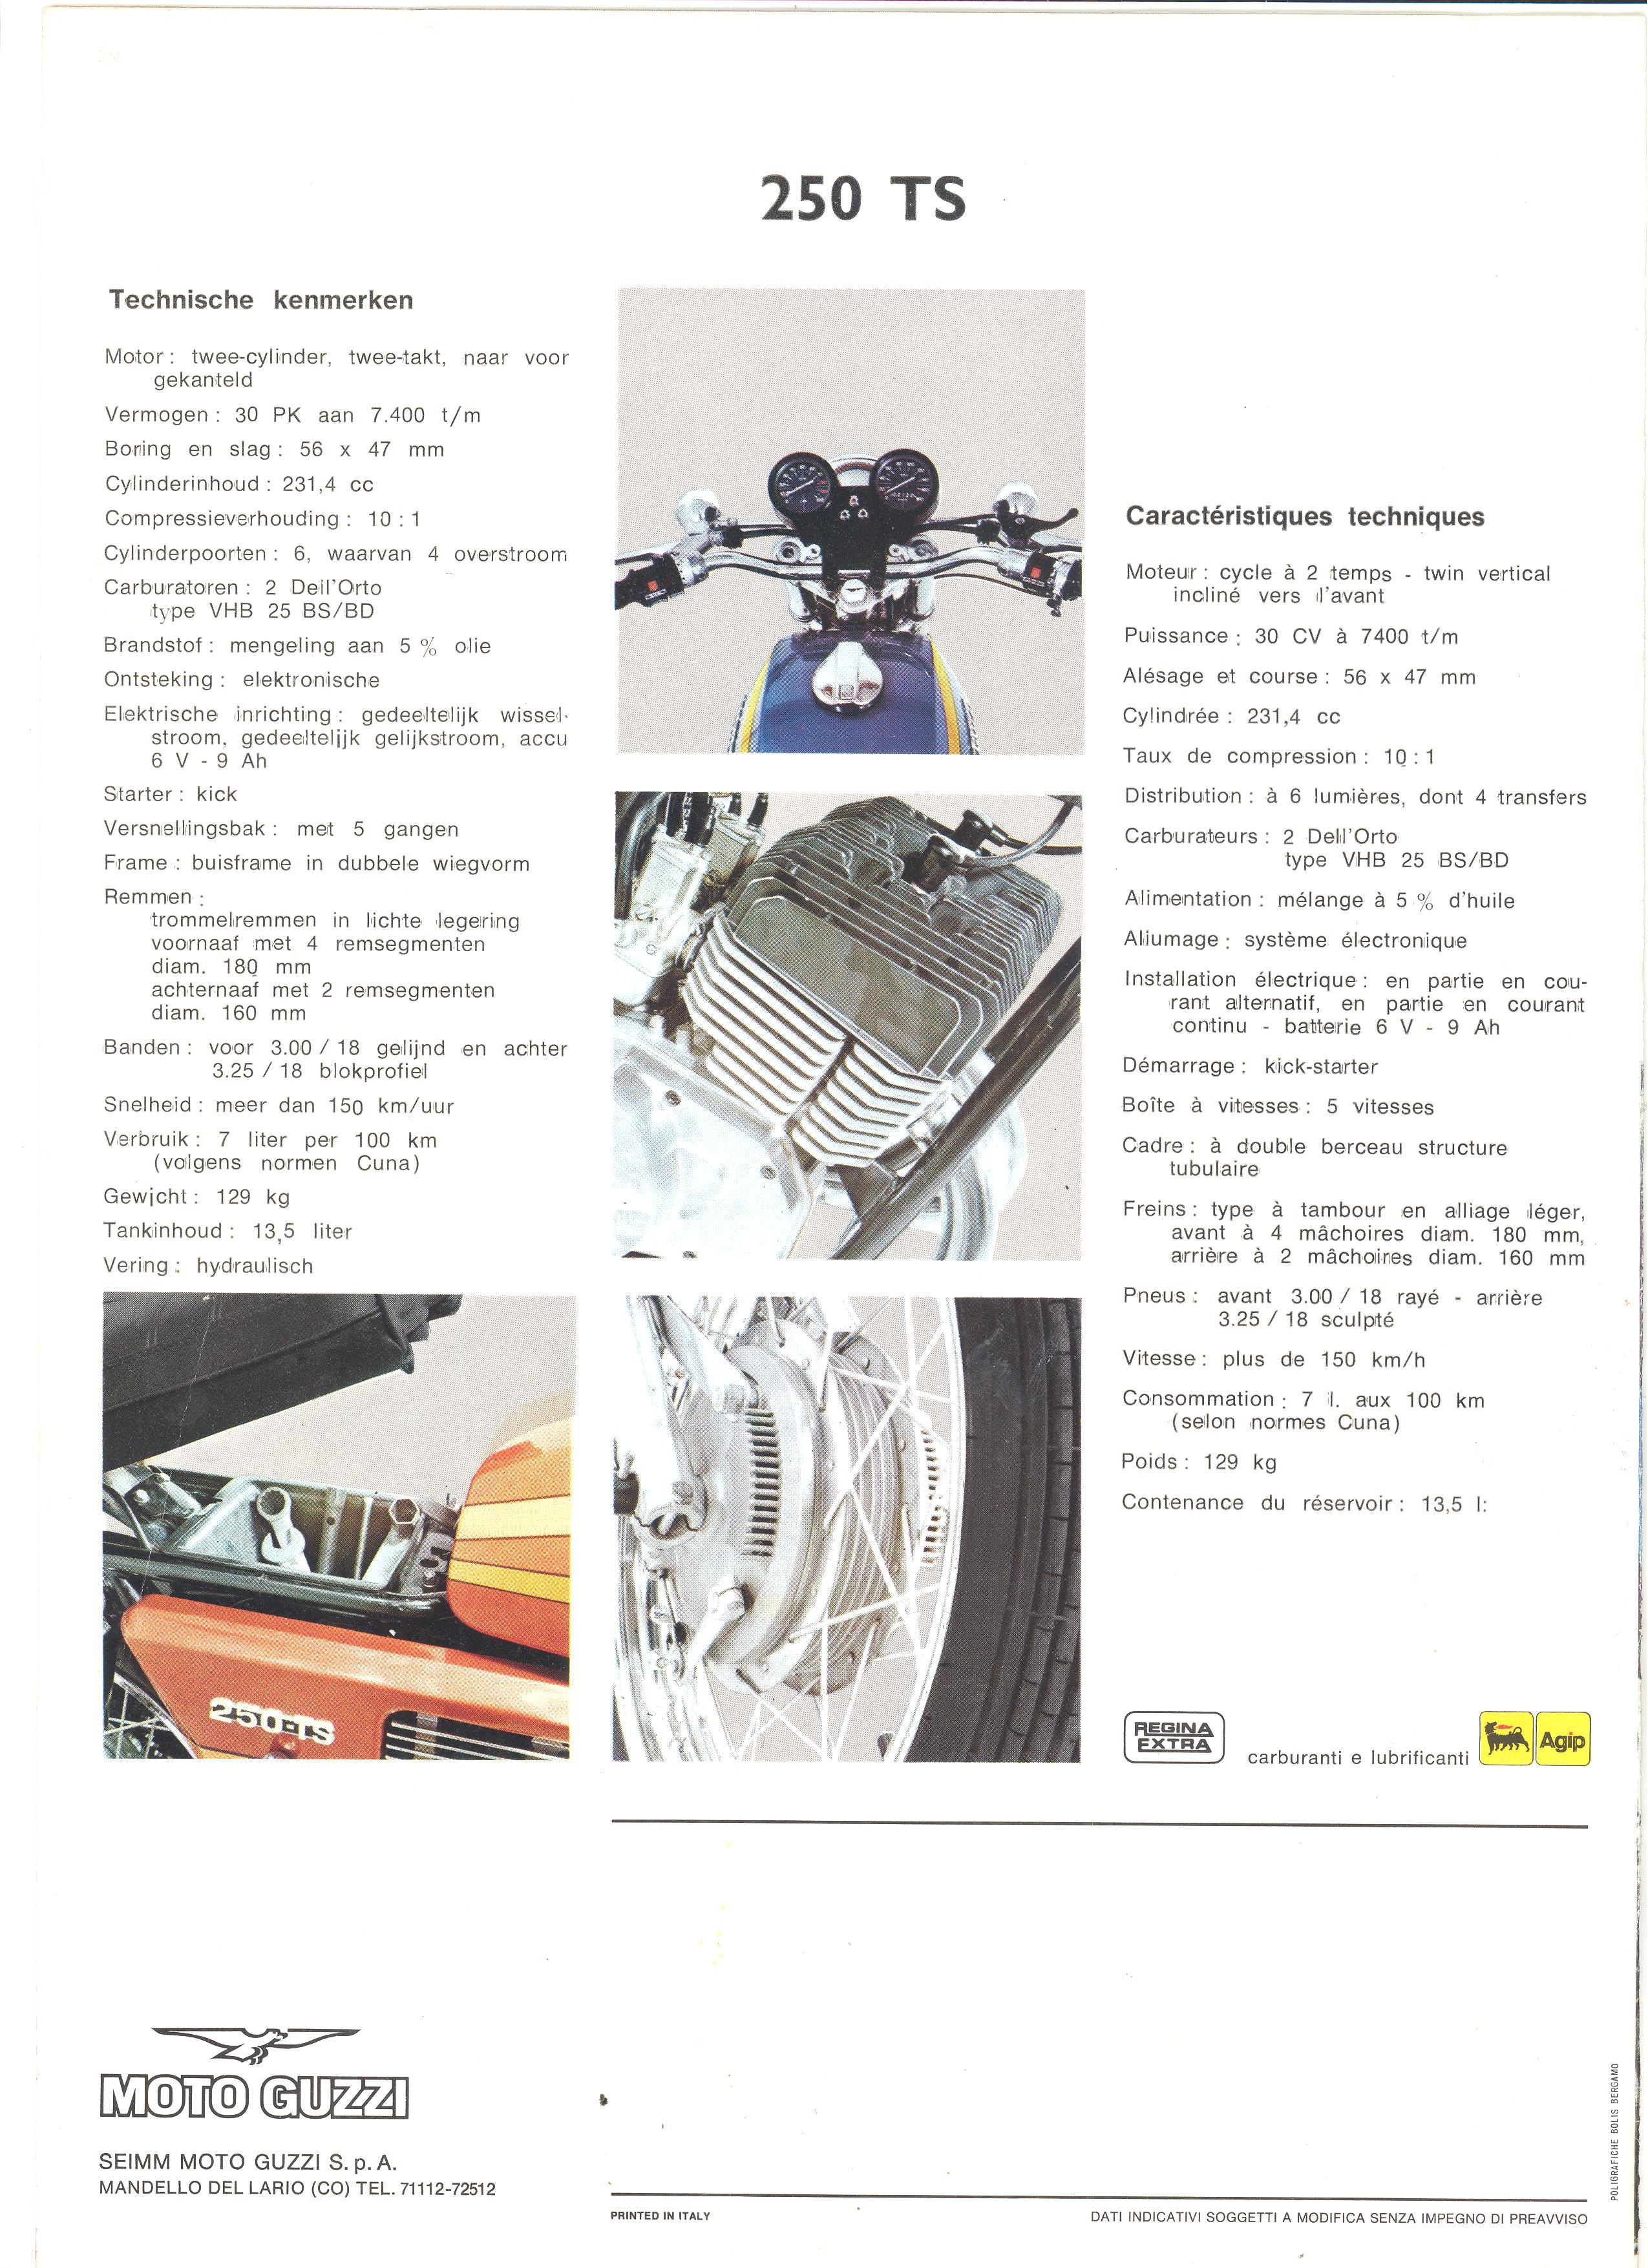 Moto Guzzi factory brochure: 250 TS